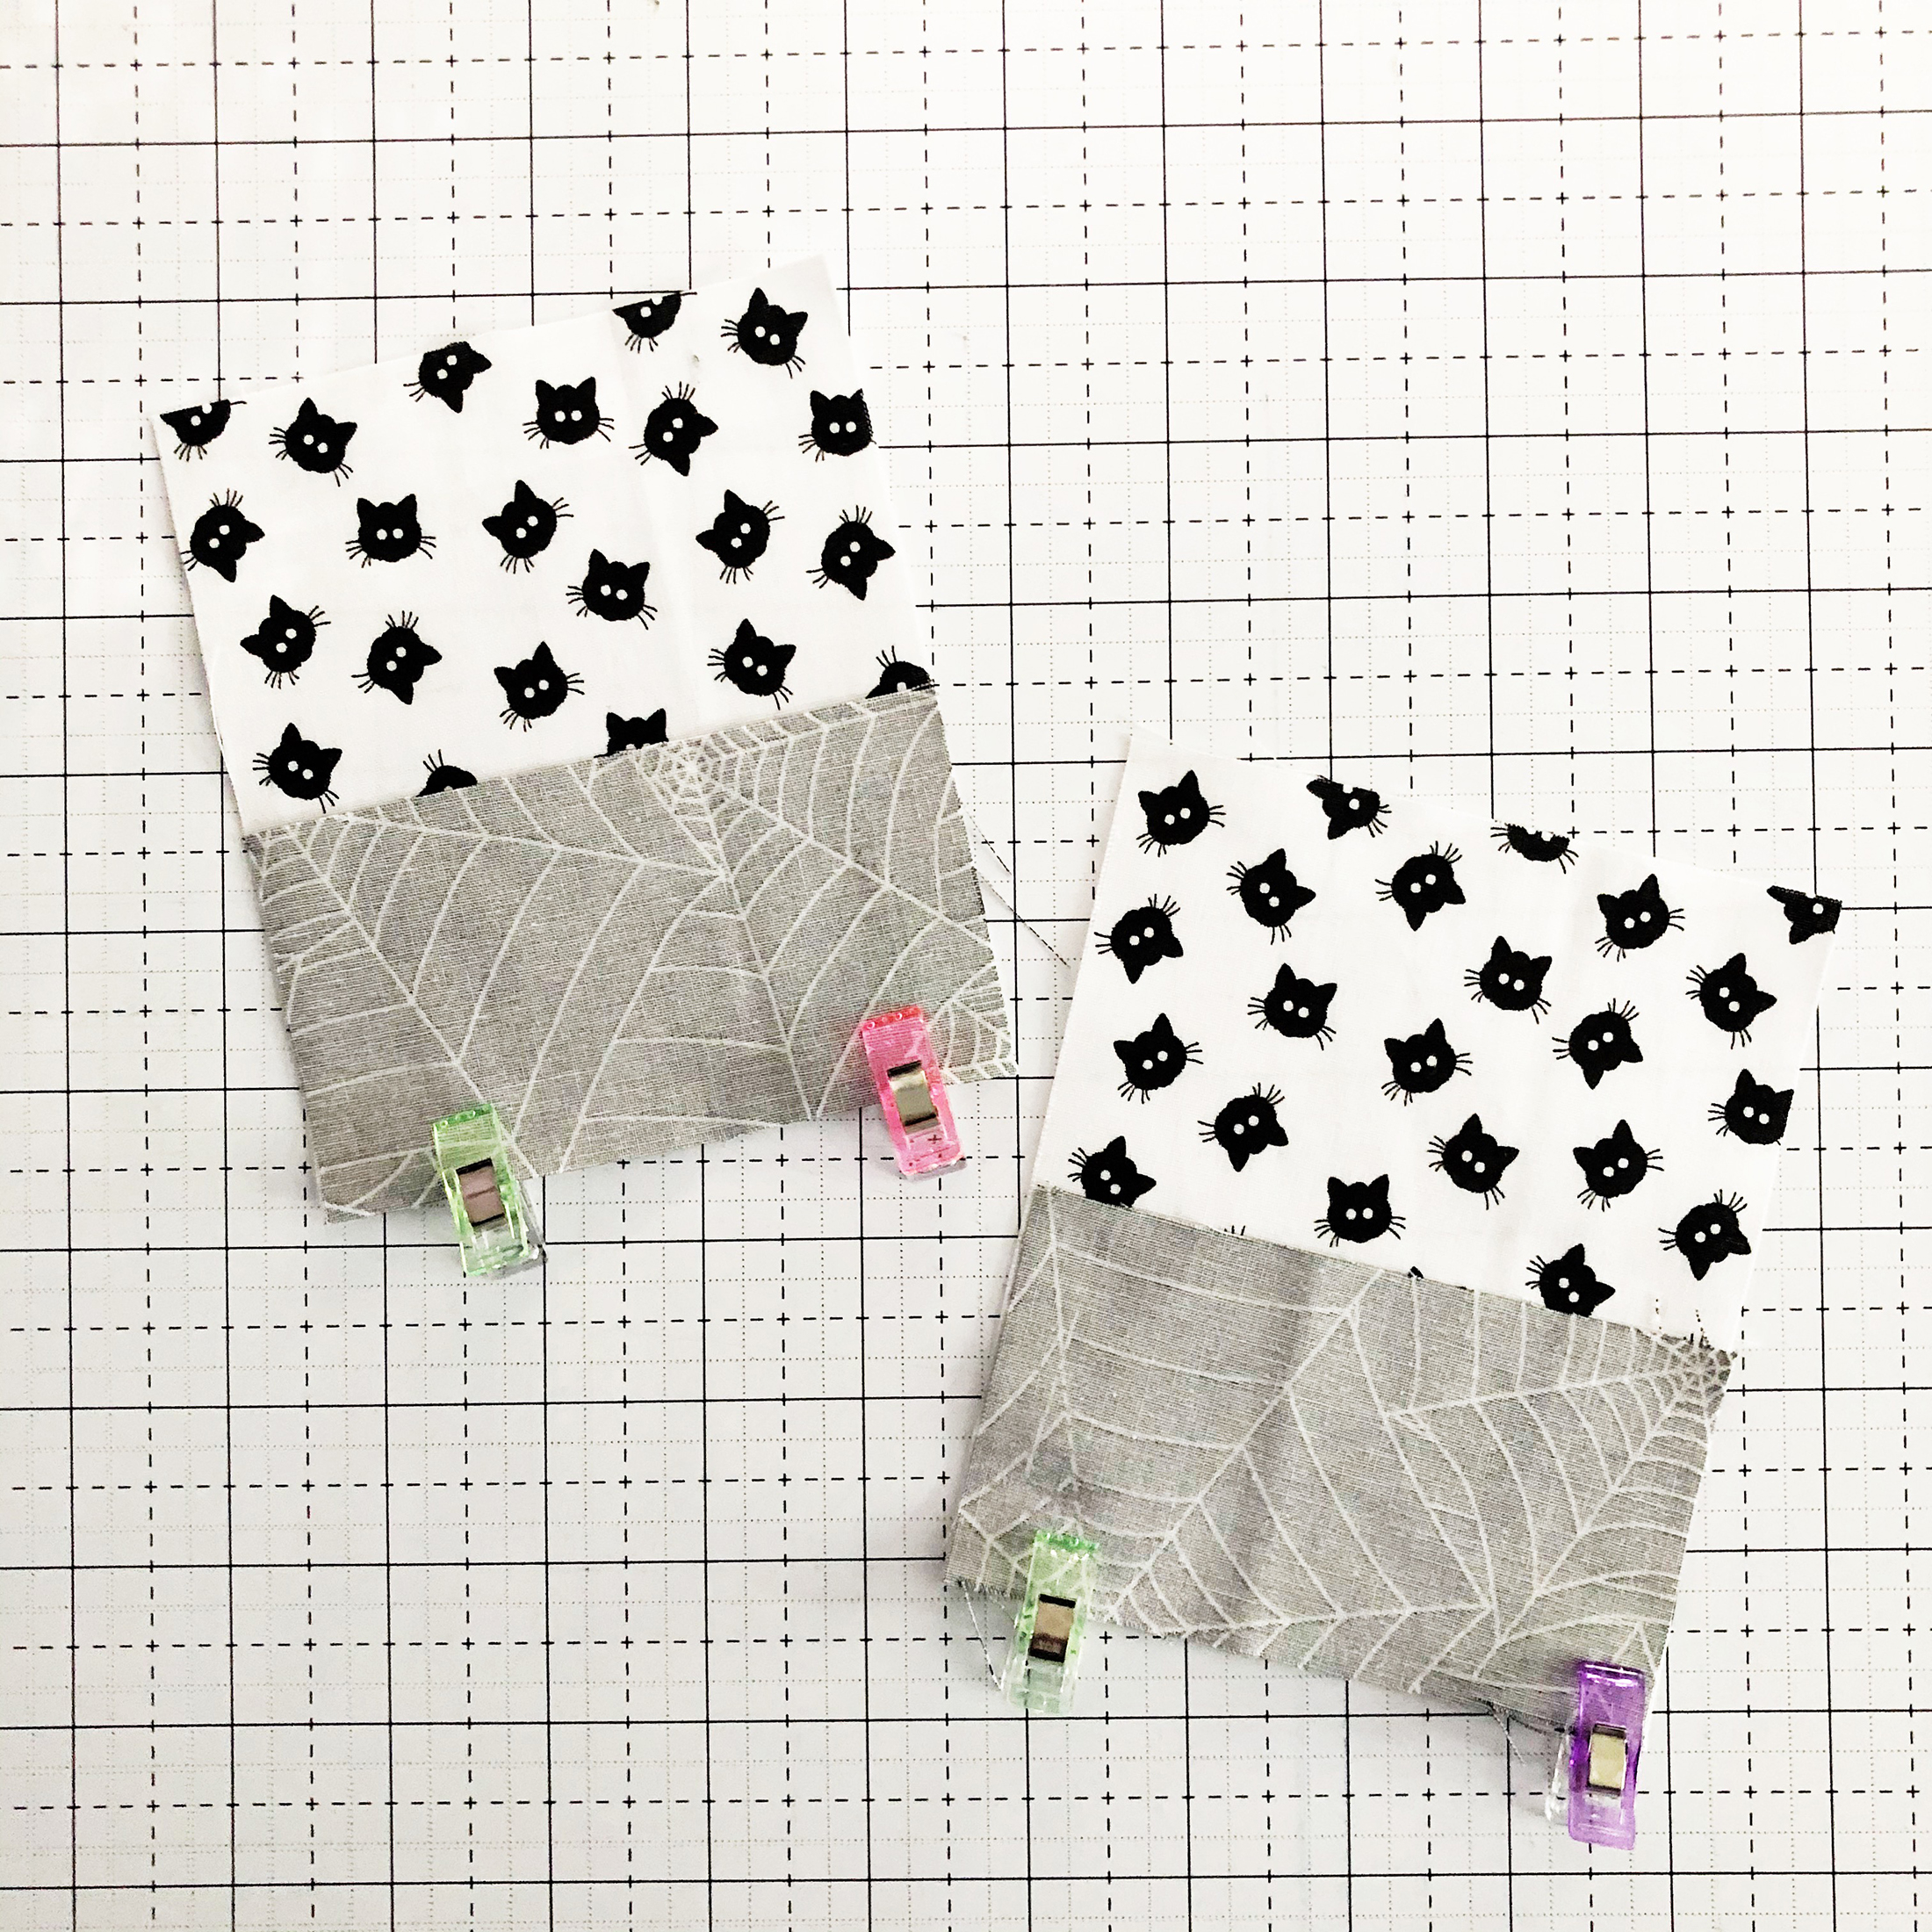 Halloween Mini Treat Bag: Prepare the fabric for sewing